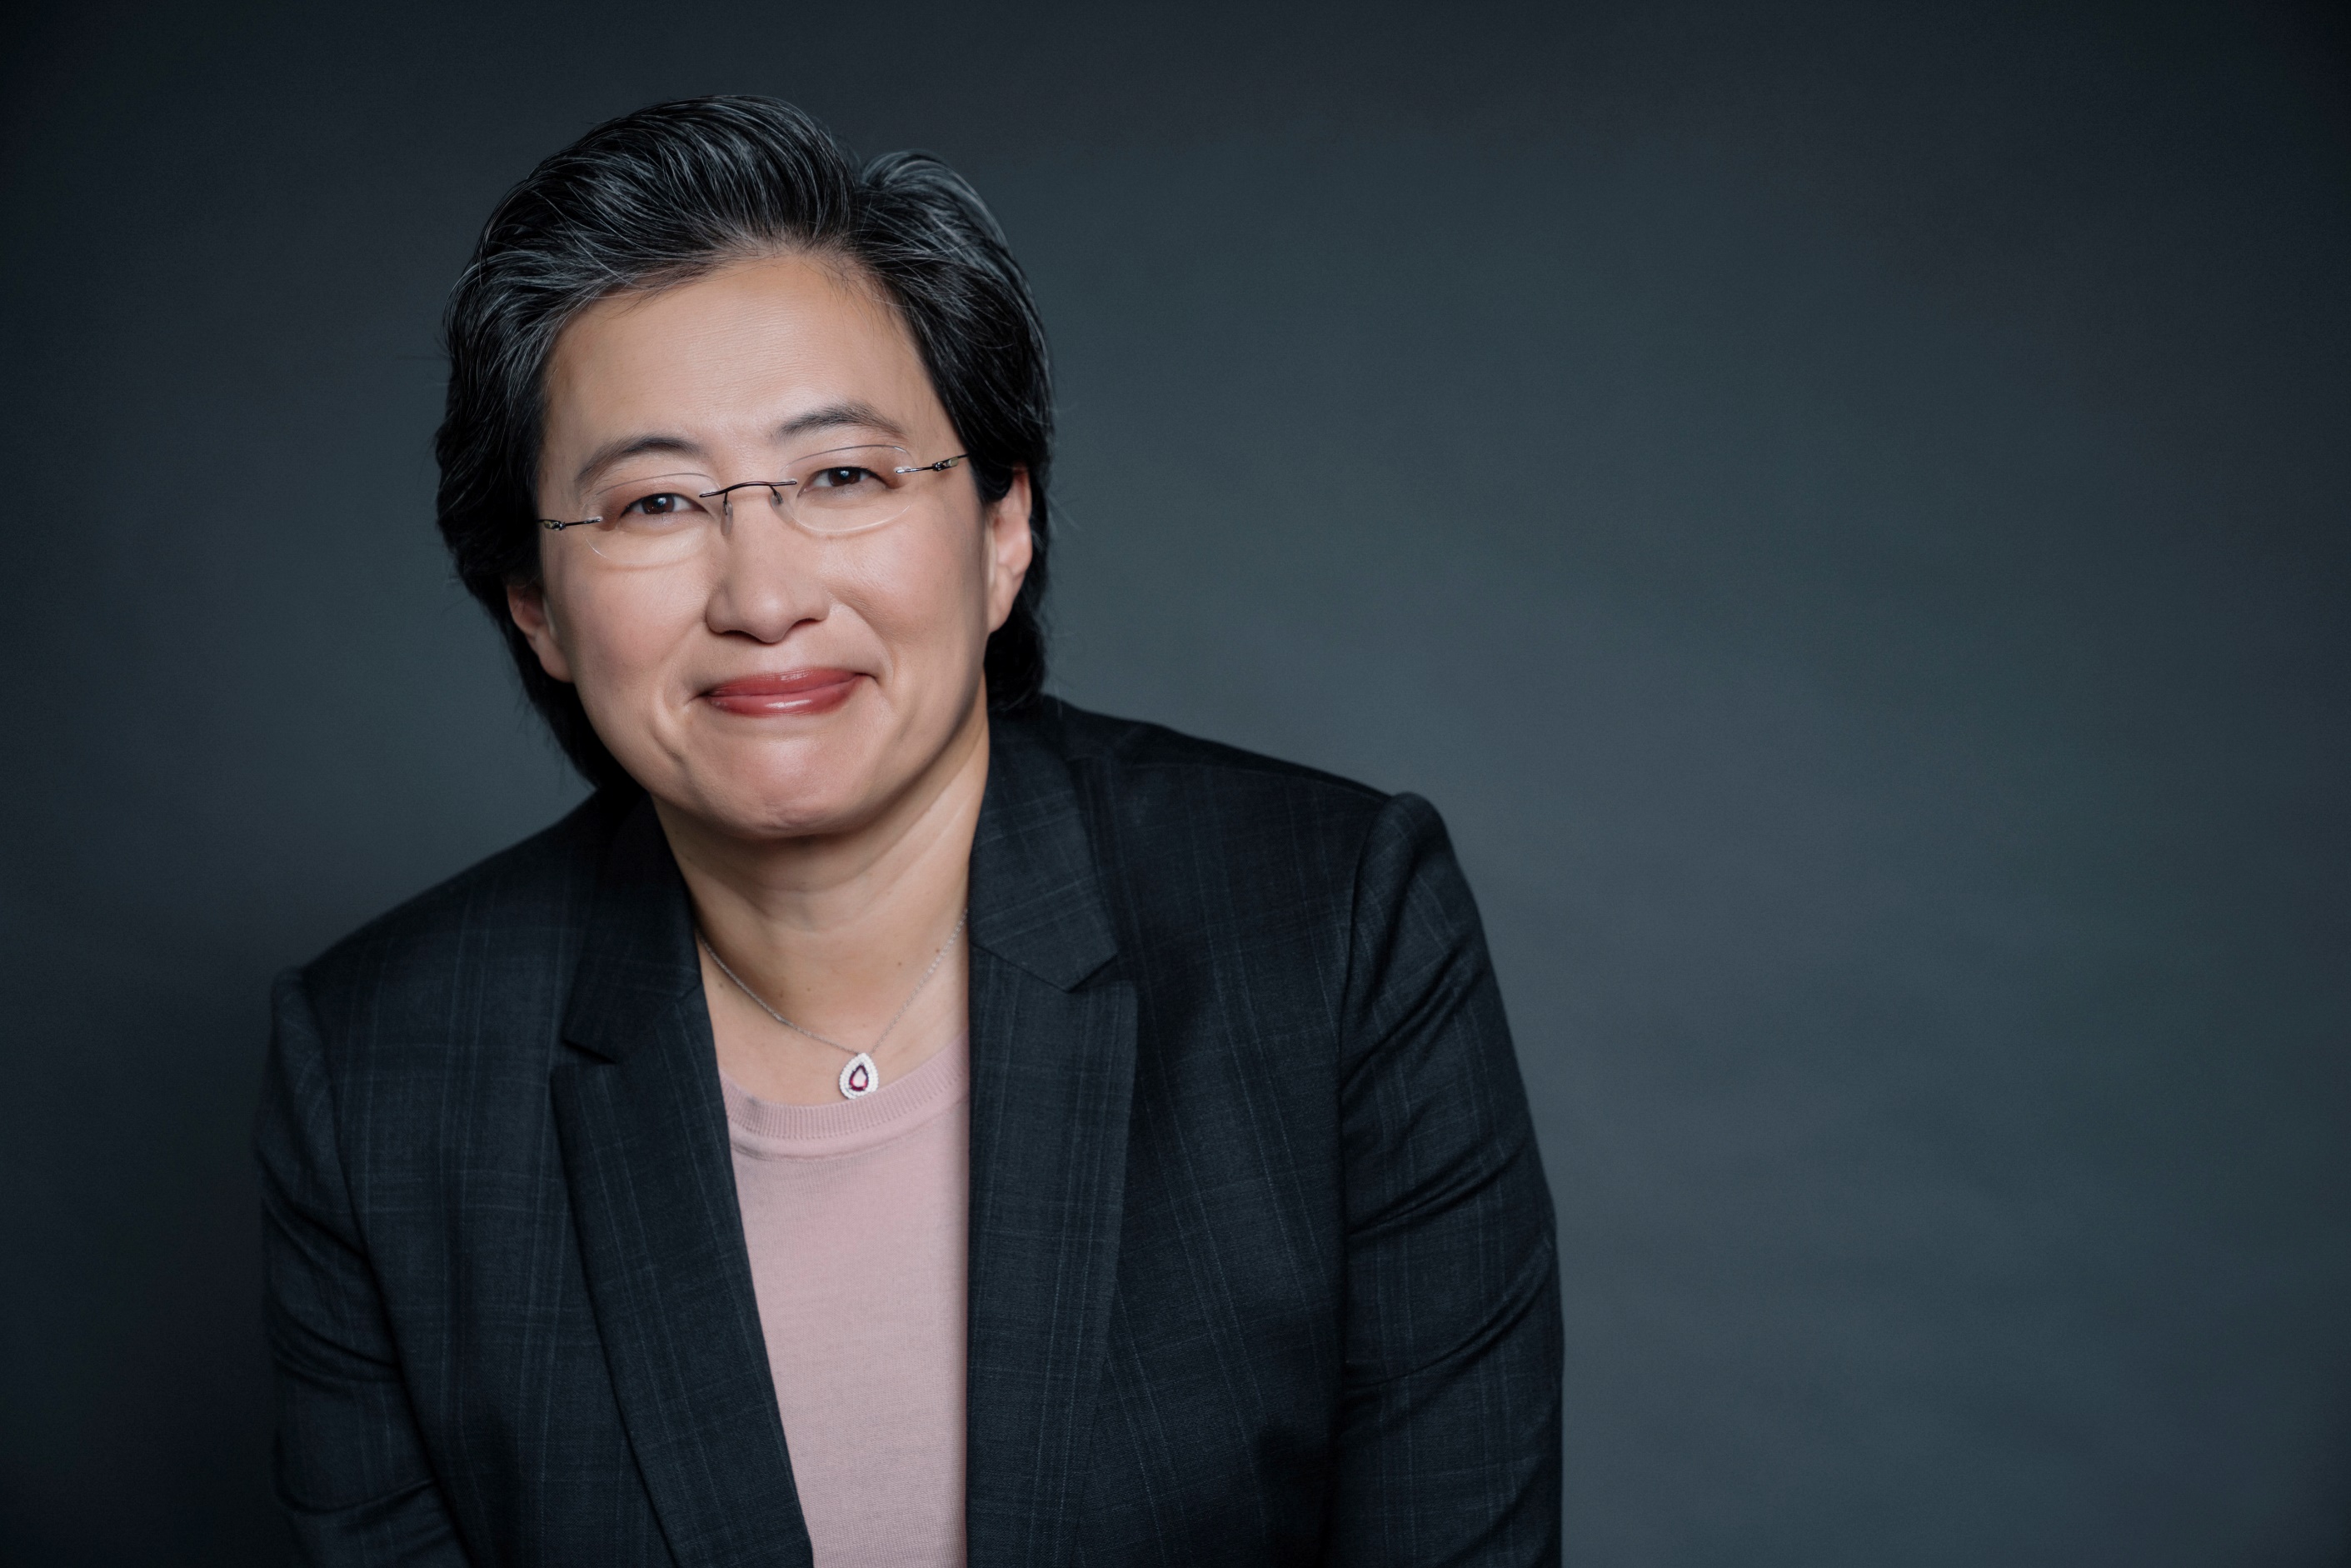 amd president and ceo dr  lisa su ผู้บริหาร AMD ดร.ลิซ่า ซู CEO Dr. Lisa Su เตรียมเปิดเผยข้อมูลสำคัญในหัวข้อ “The Next Generation of High Performance Computing” ในงาน Computex 2019 ที่จะถึงนี้ 